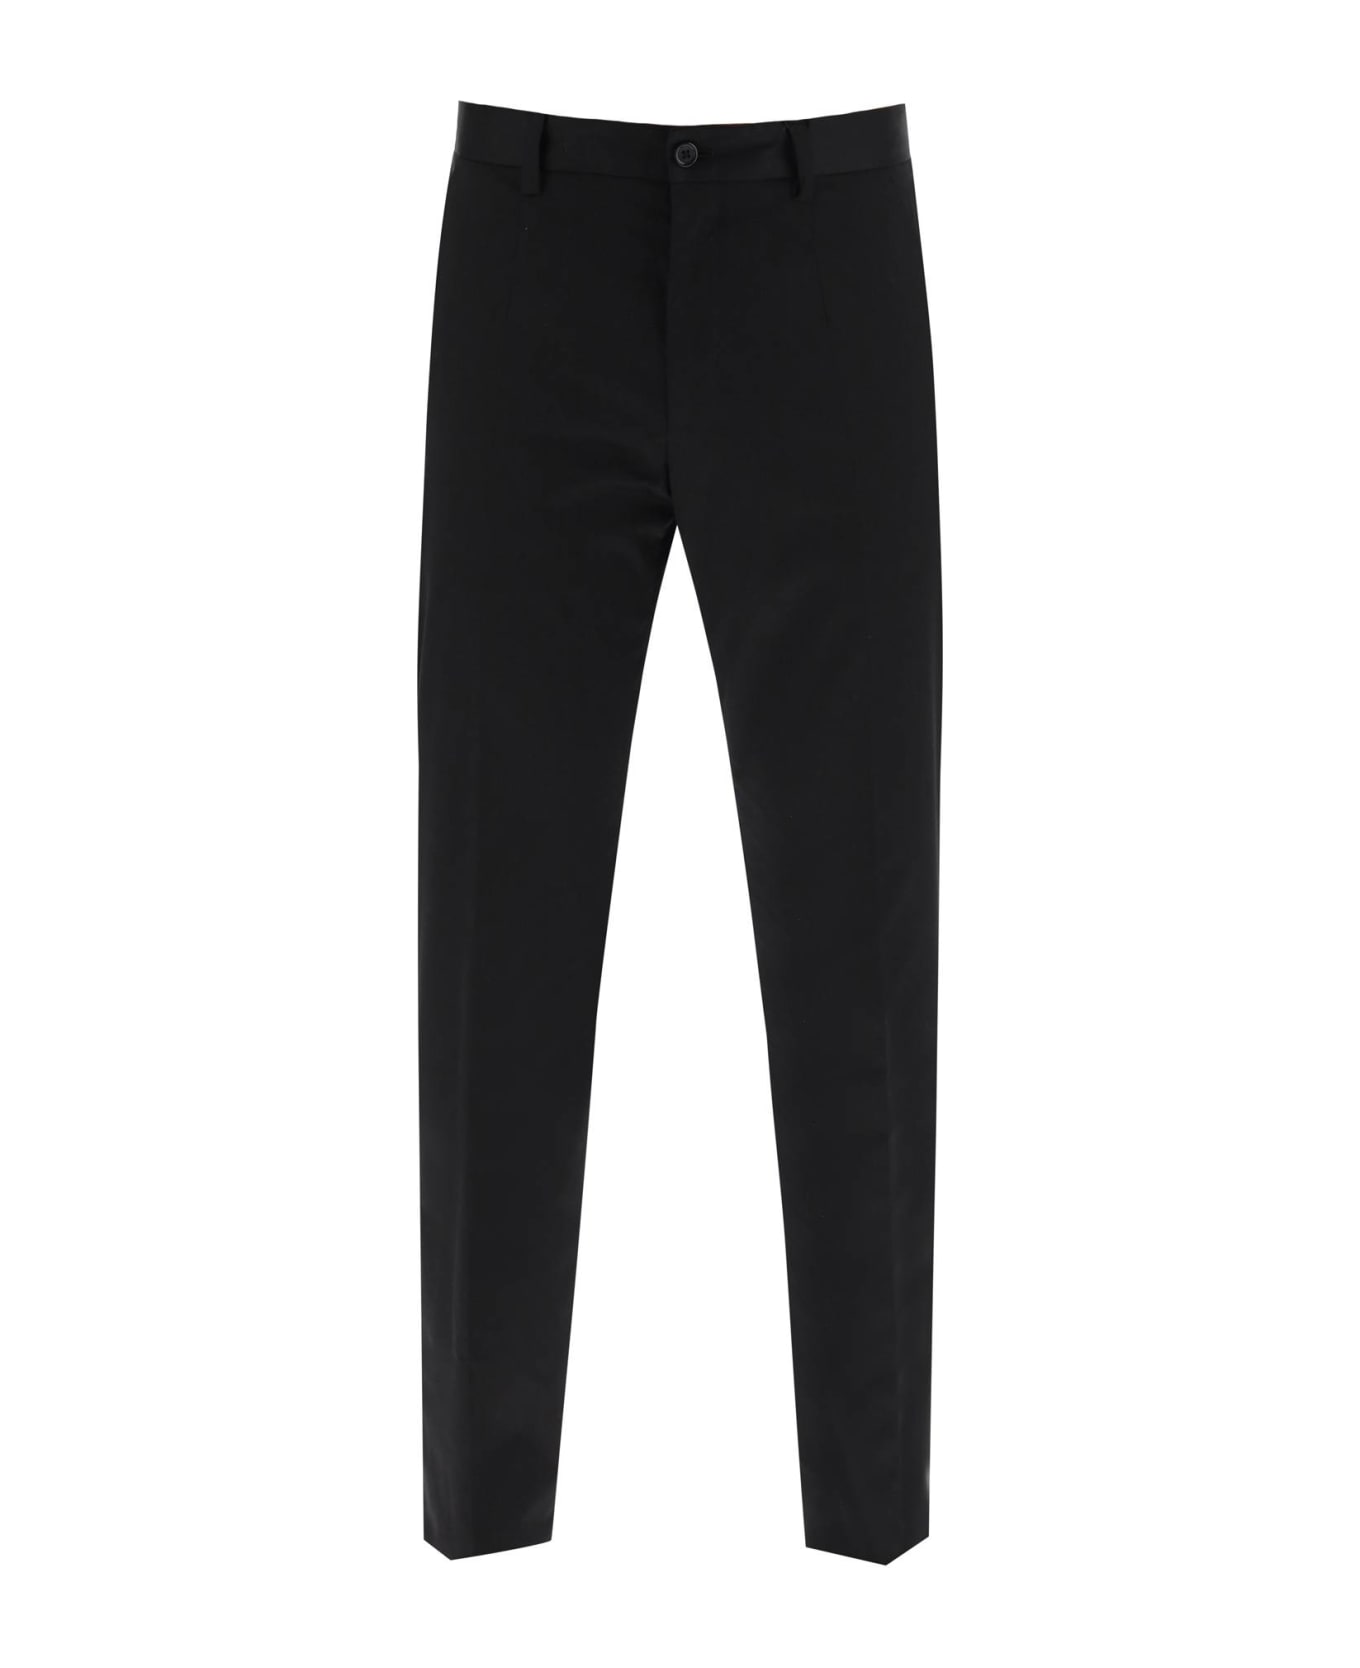 Dolce & Gabbana Cotton Chino Pants - NERO (Black)